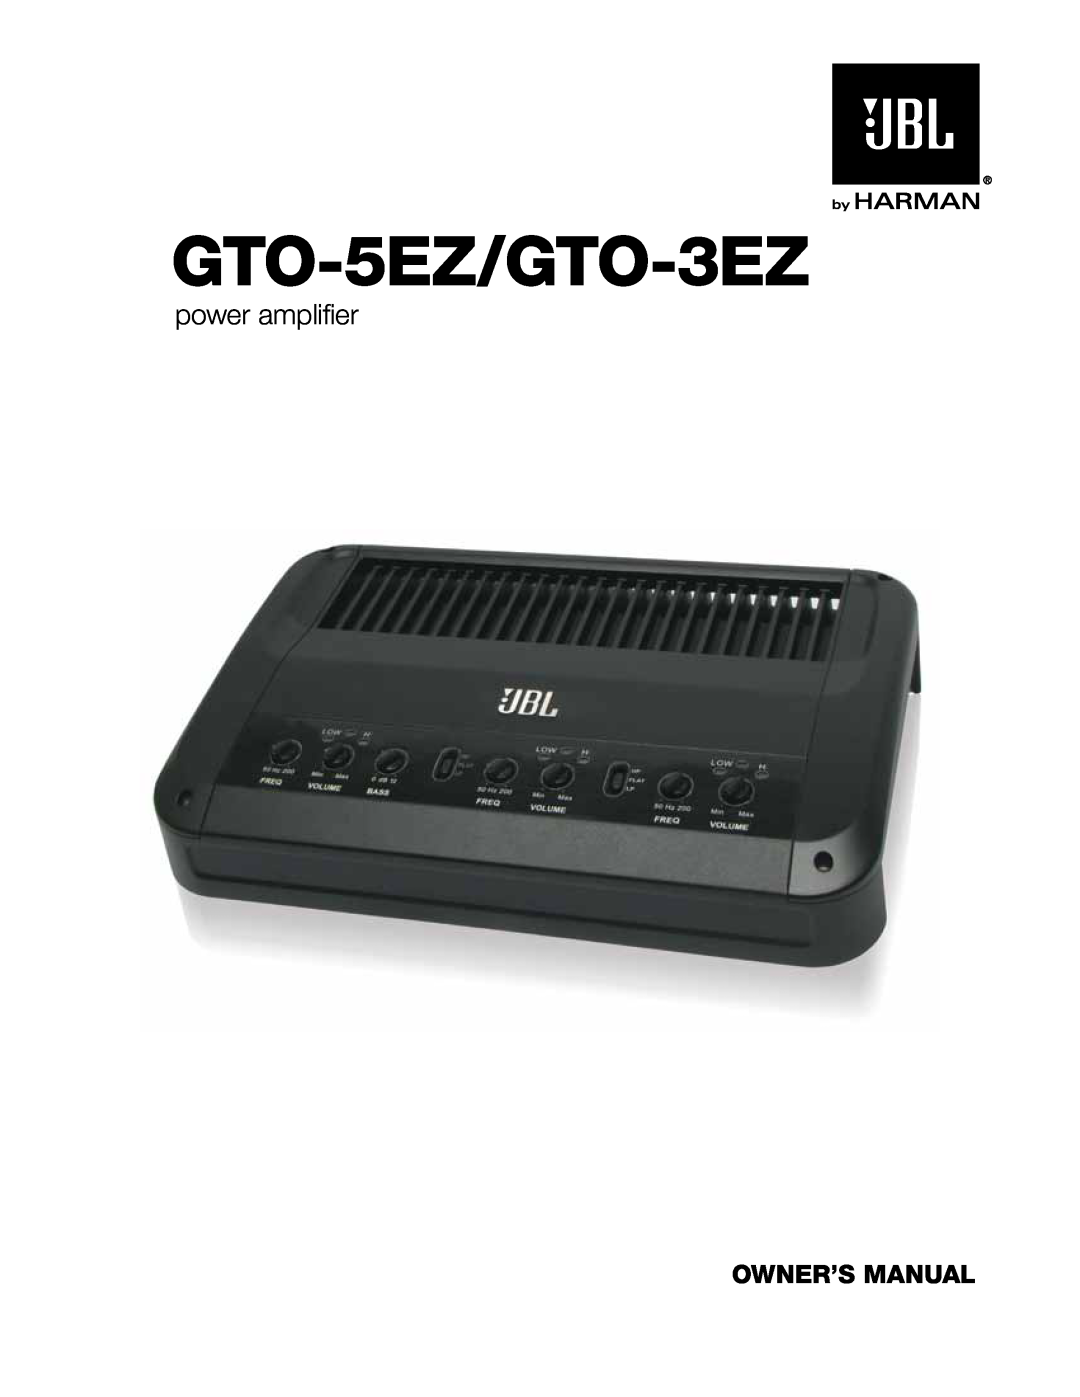 Harman owner manual GTO-5EZ/GTO-3EZ, power amplifier 